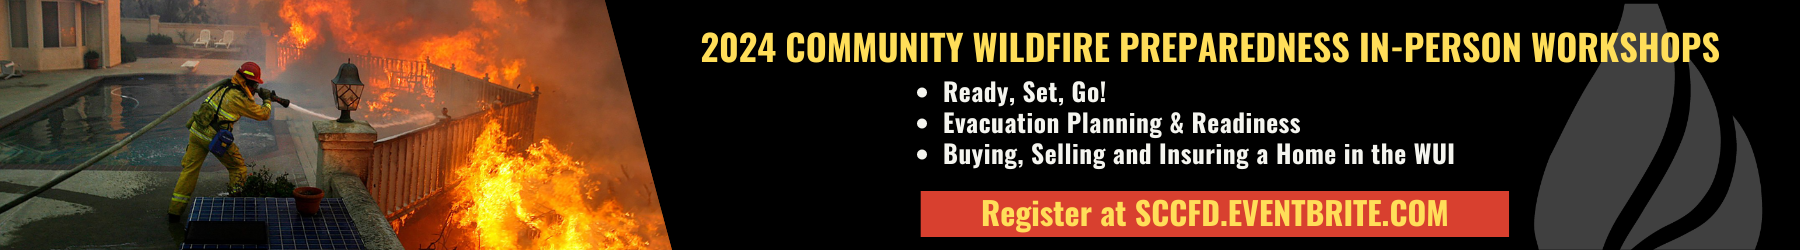 Community Wildfire Preparedness Workshops